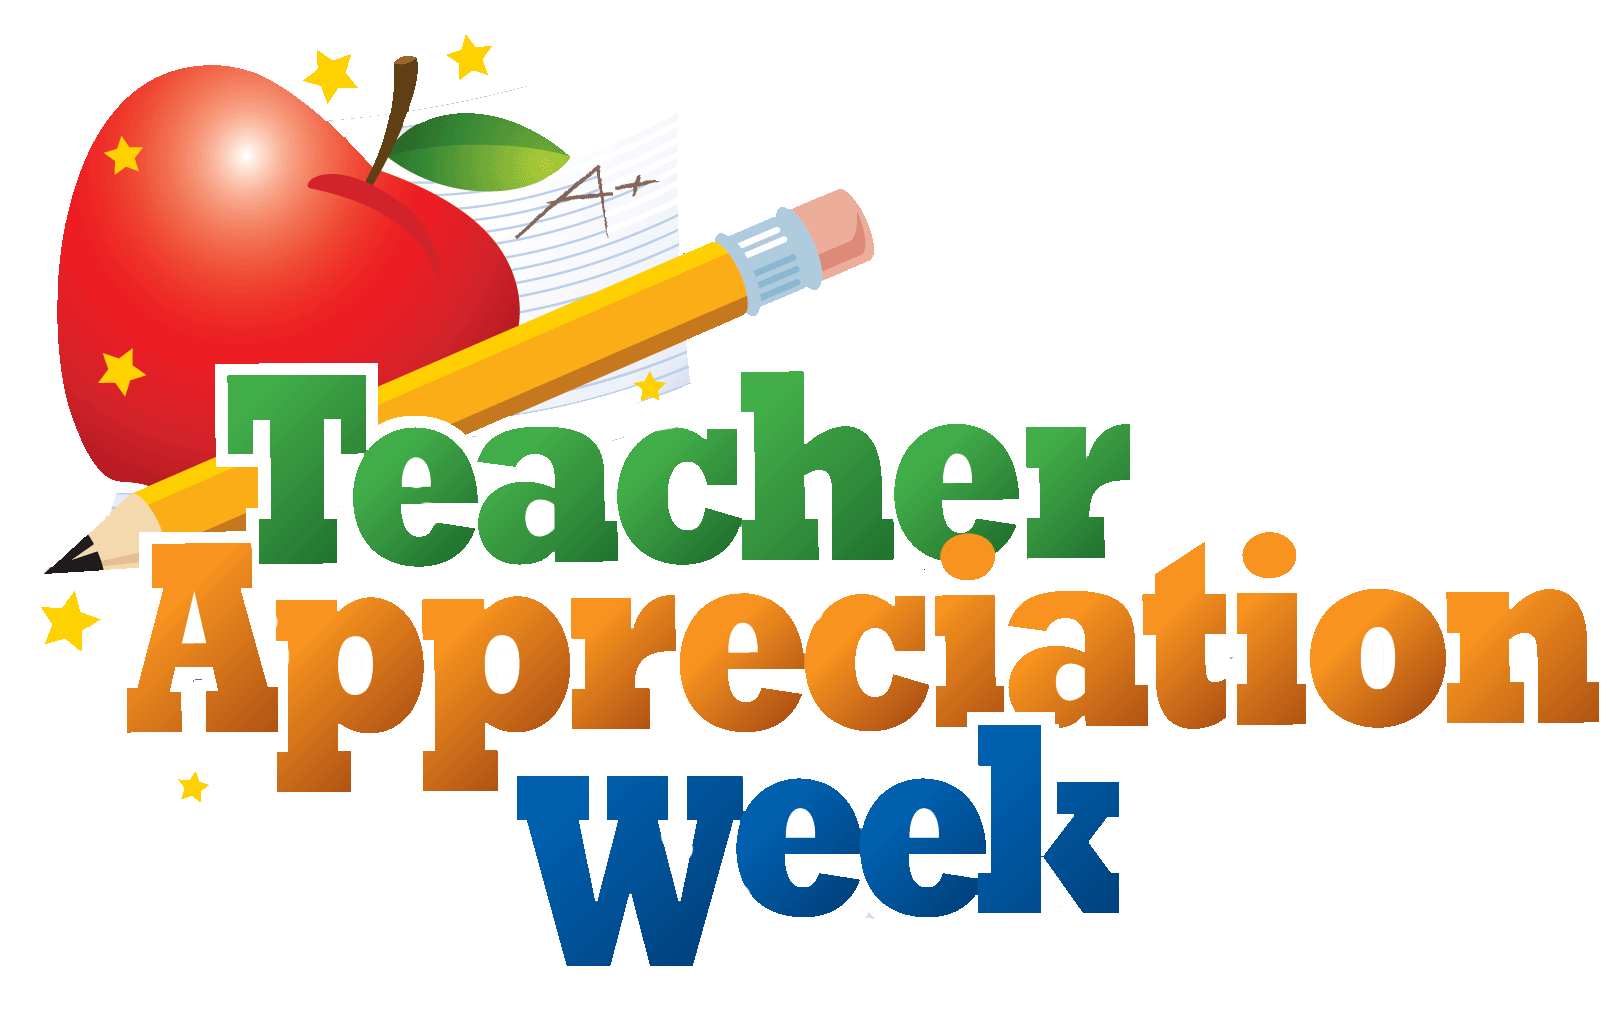 Teacher appreciation week is. Words clipart april